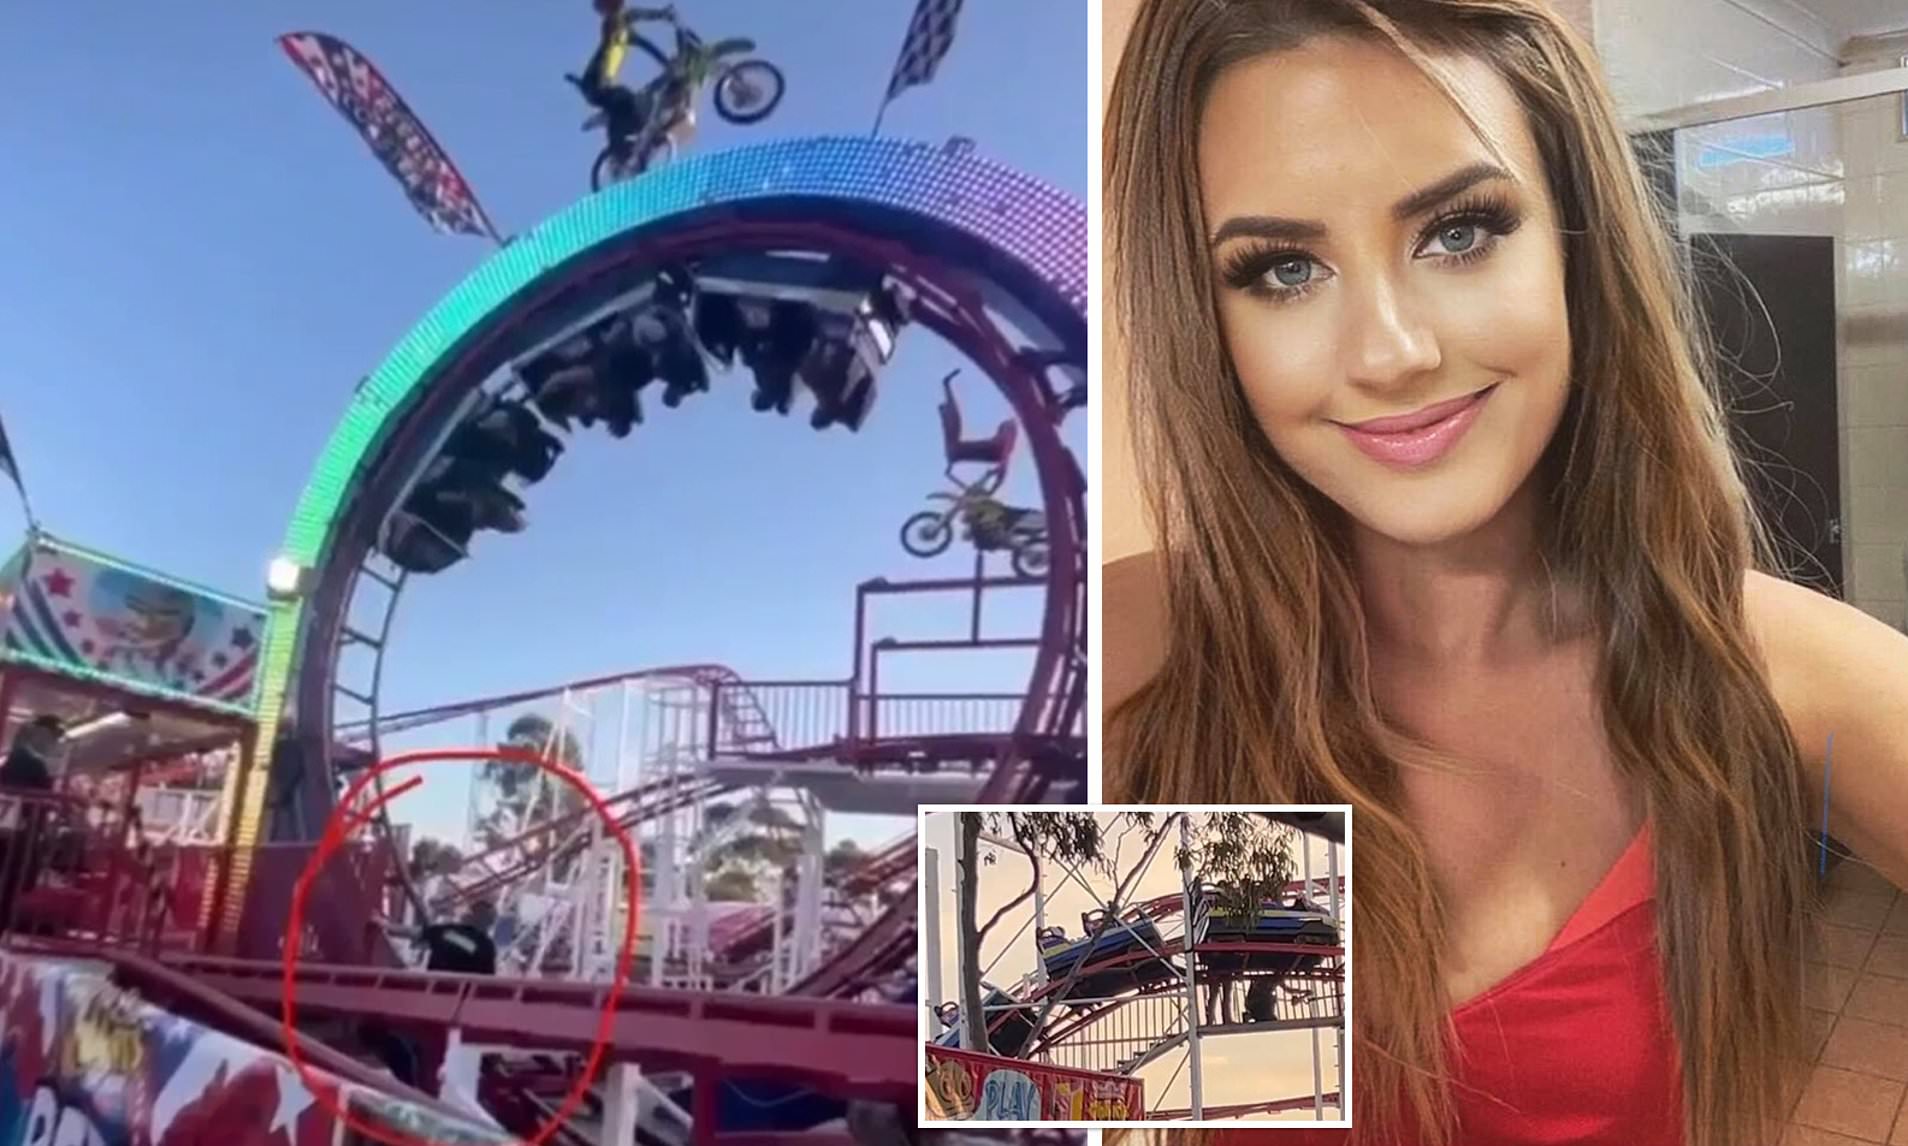 charles latimore add girls flashing on rollercoaster photo